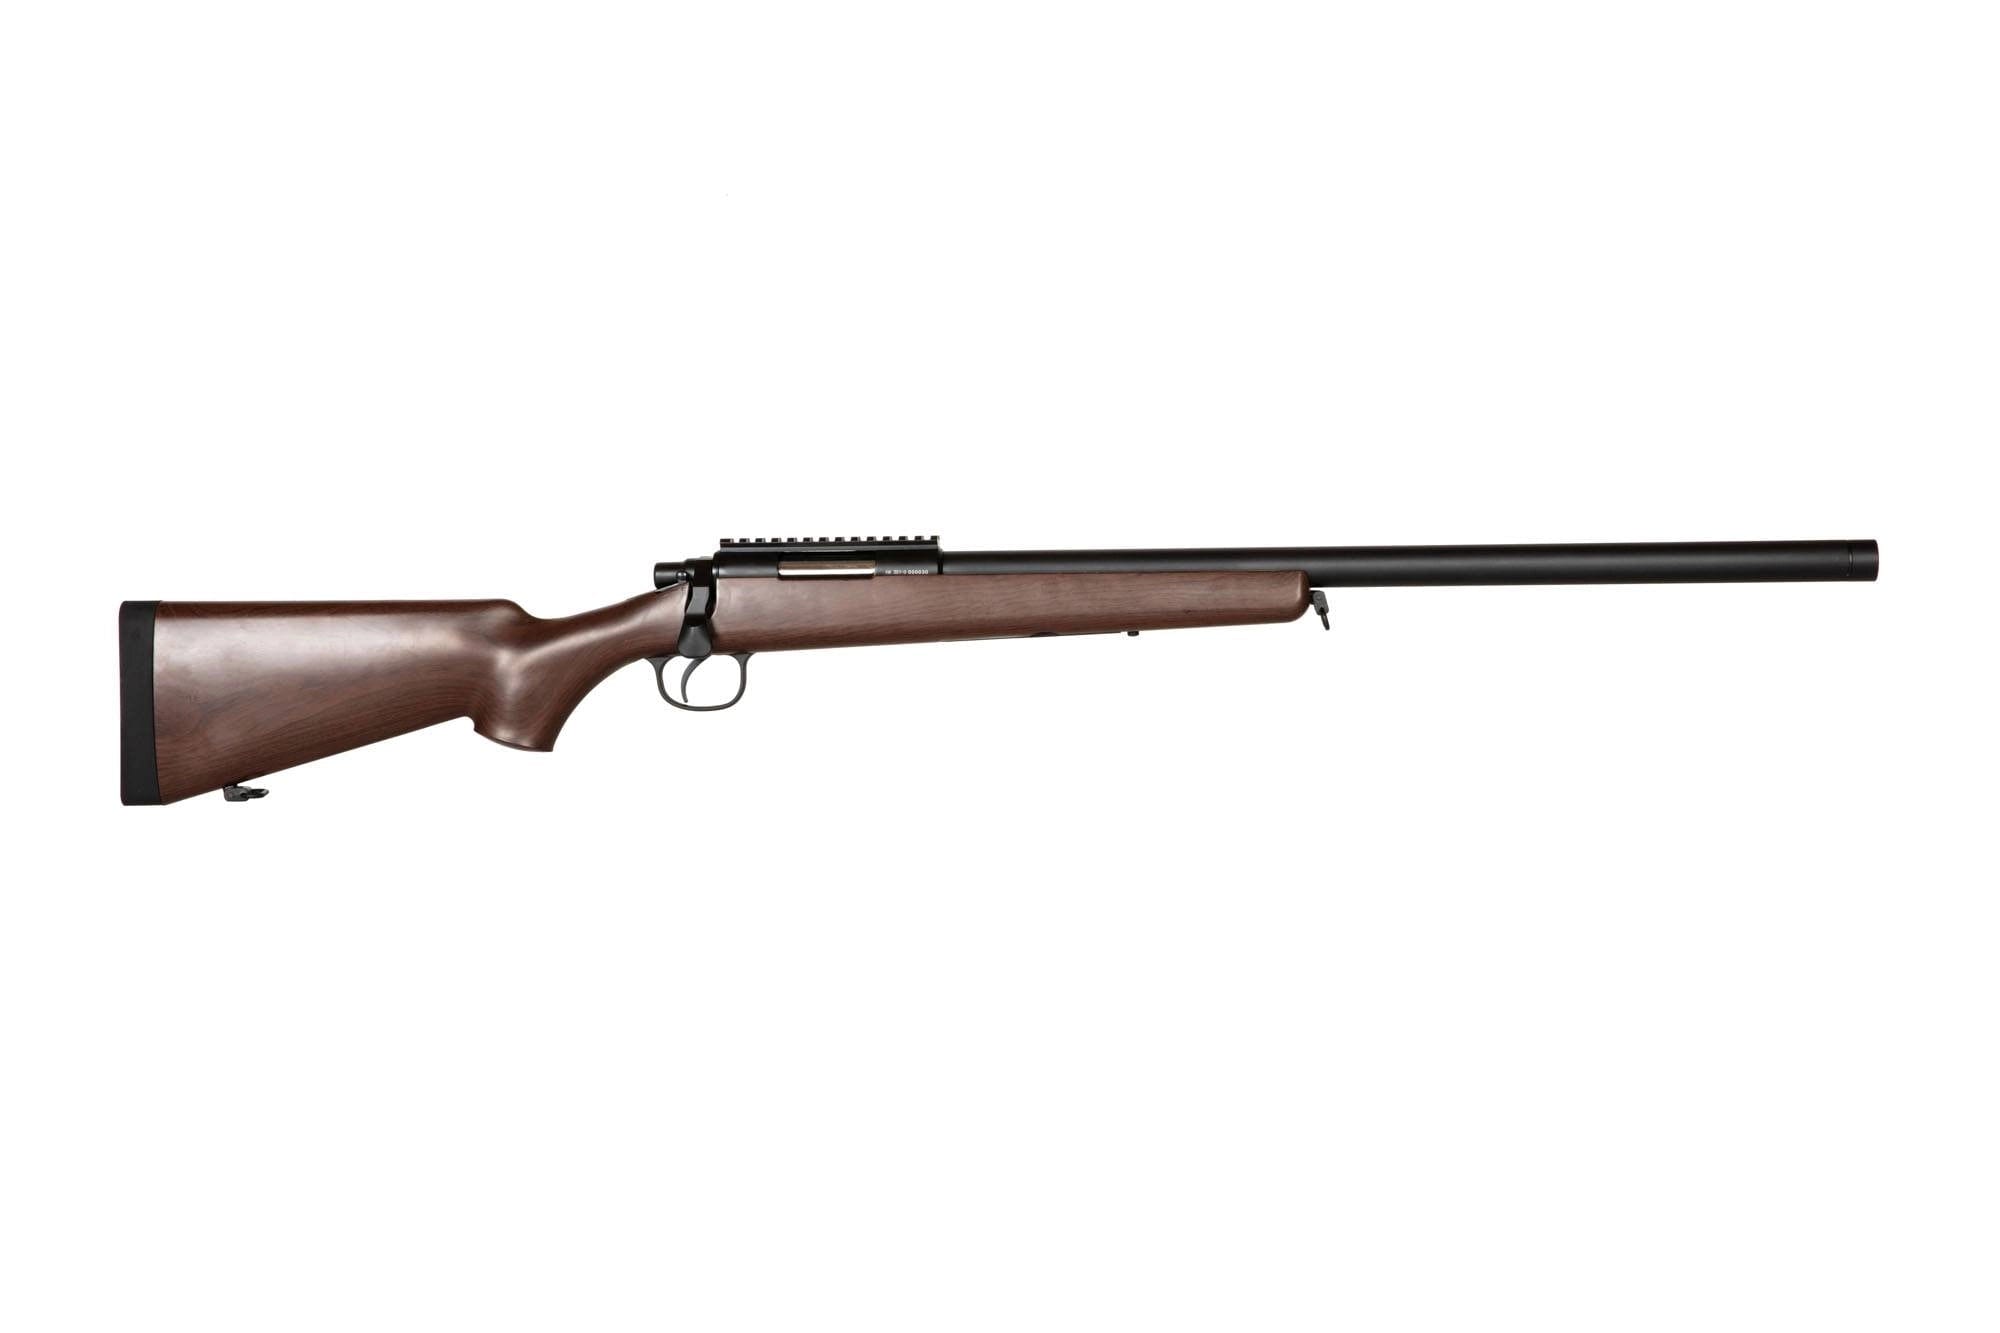 210 Sniper rifle - Wooden